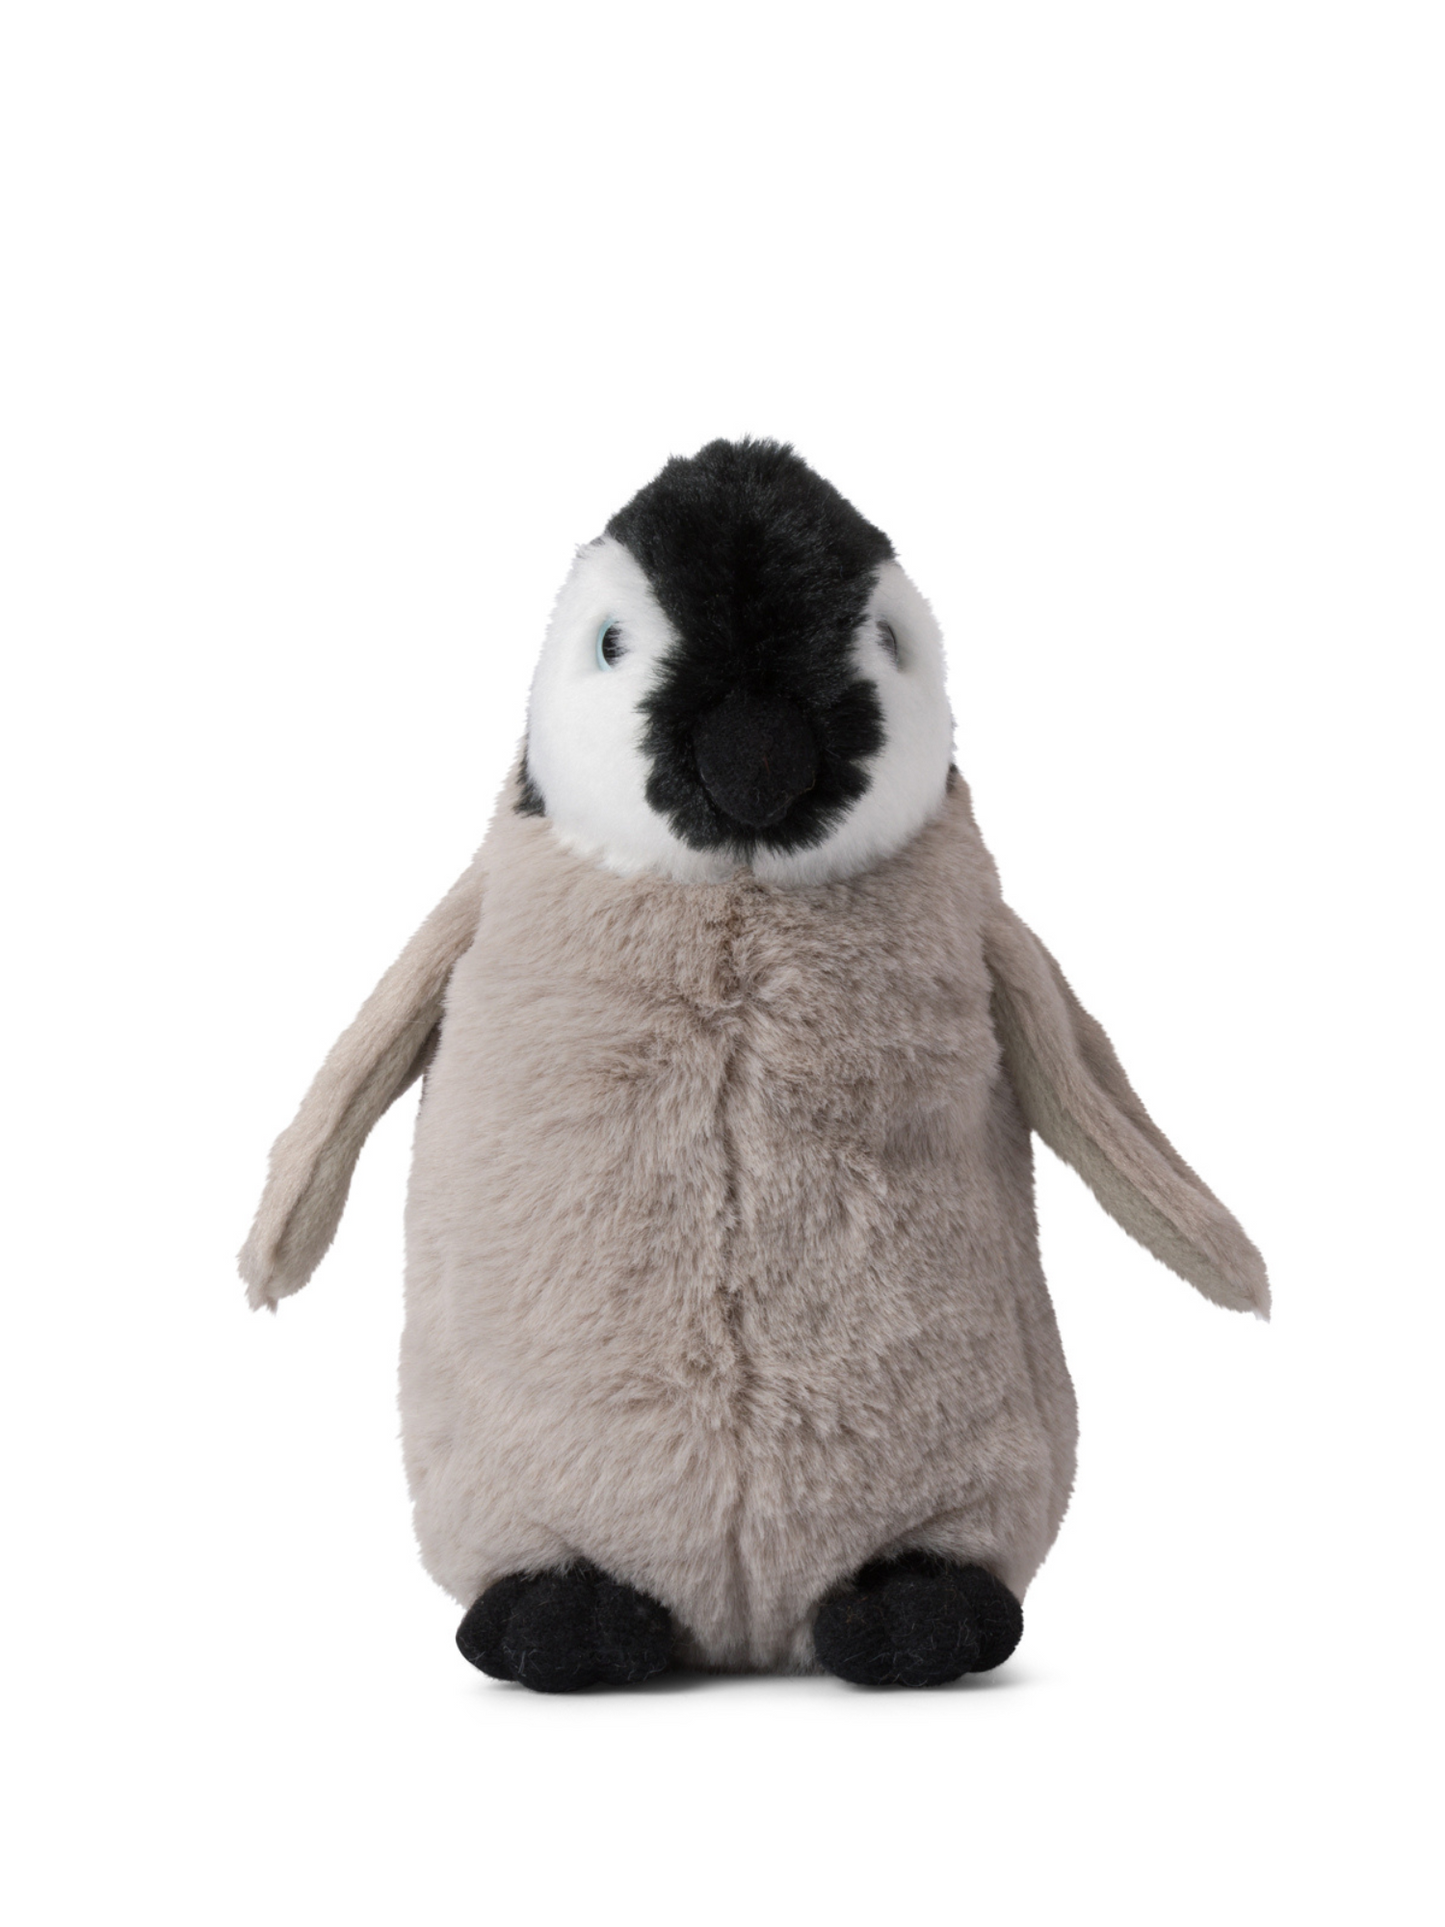 Pingvin - WWF bamse